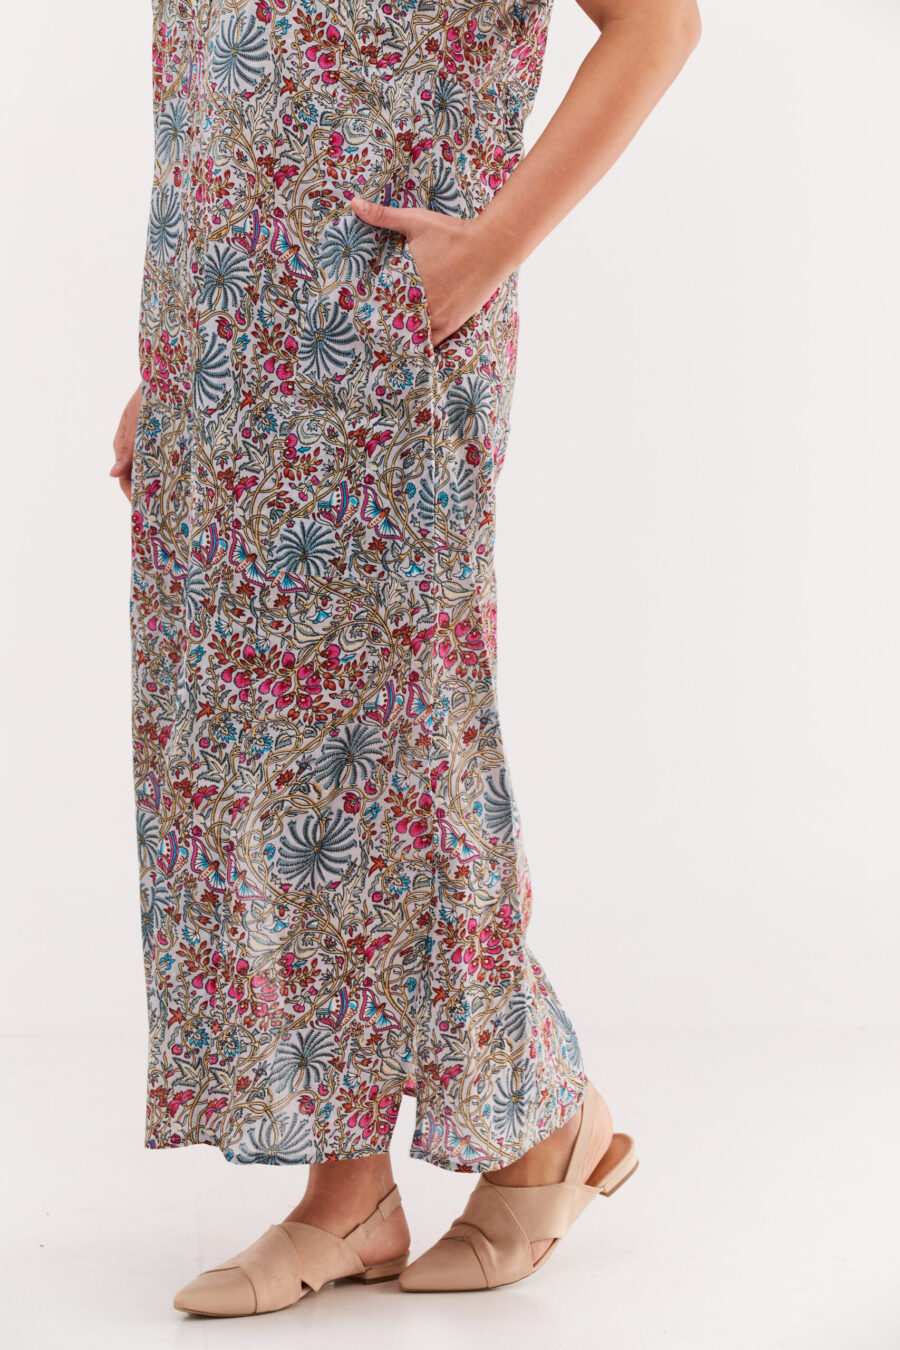 Jalabiya dress | Uniquely designed dress – Libi print, serene floral print on a grey dress by comfort zone boutique